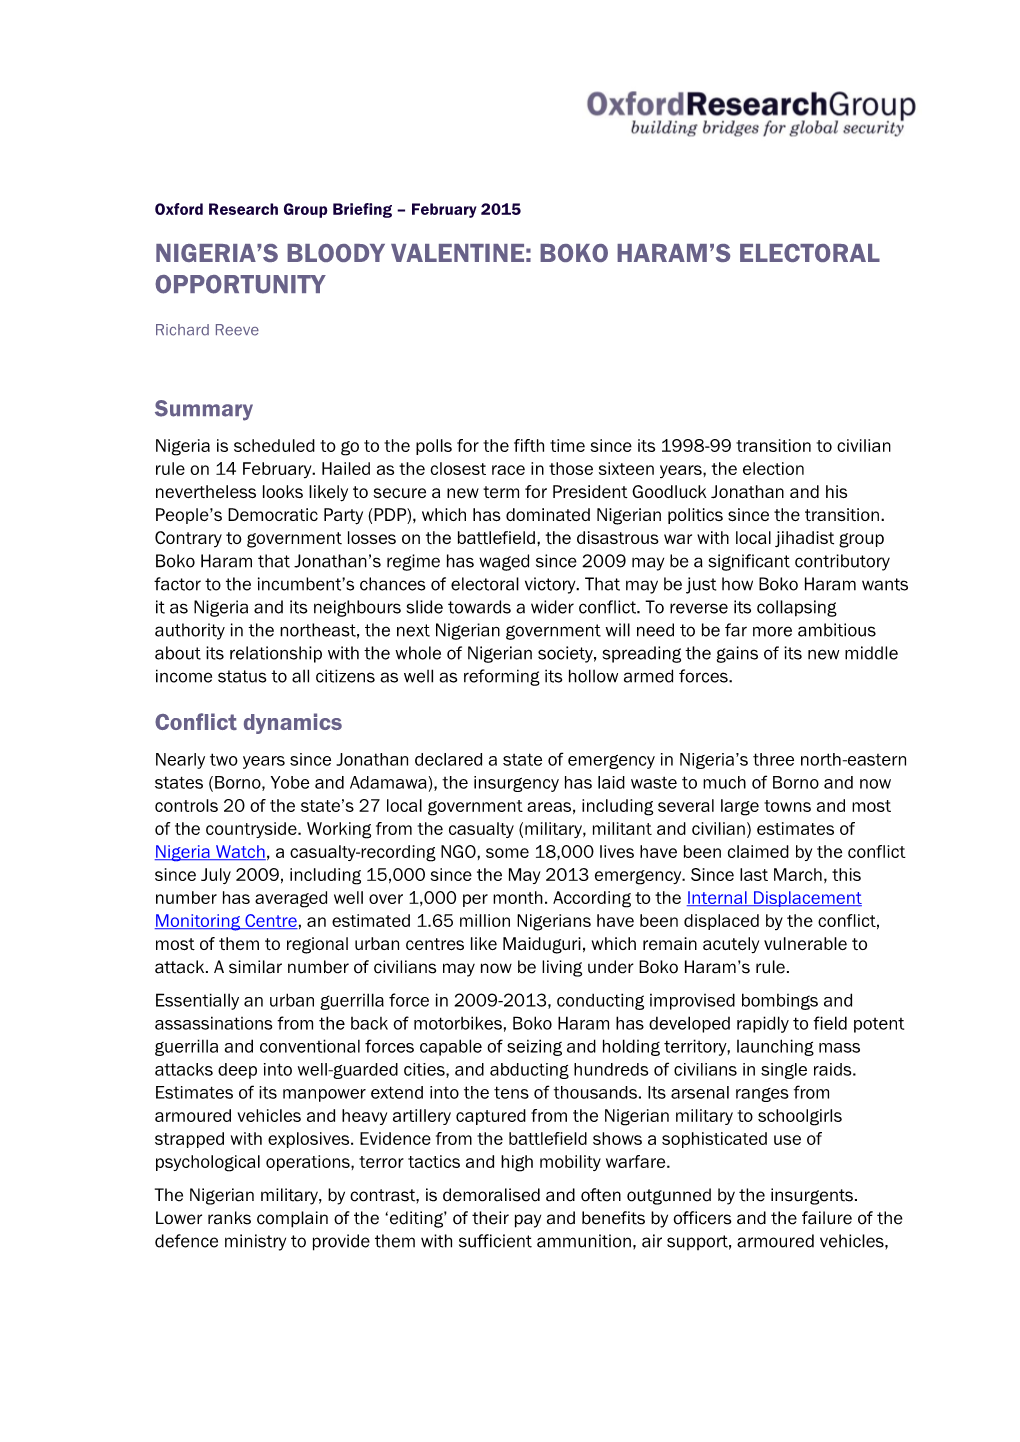 Nigeria's Bloody Valentine: Boko Haram's Electoral Opportunity